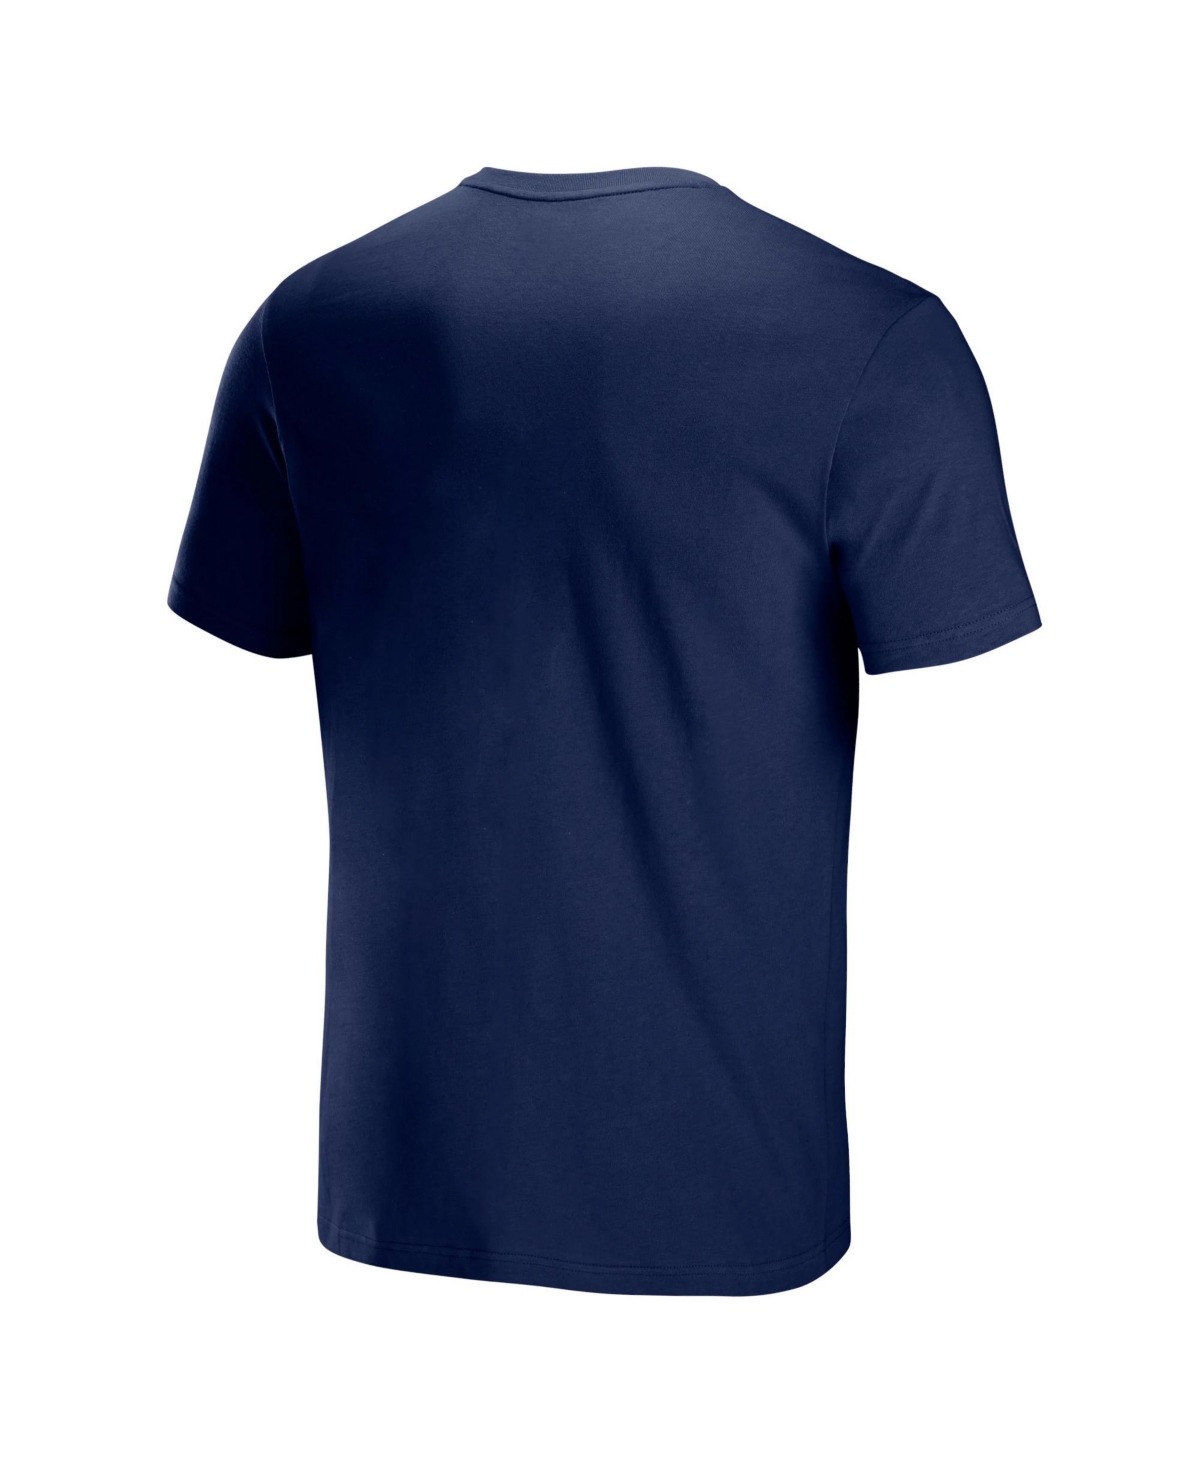 Shop Nfl Properties Men's Nfl X Staple Navy Dallas Cowboys Lockup Logo Short Sleeve T-shirt